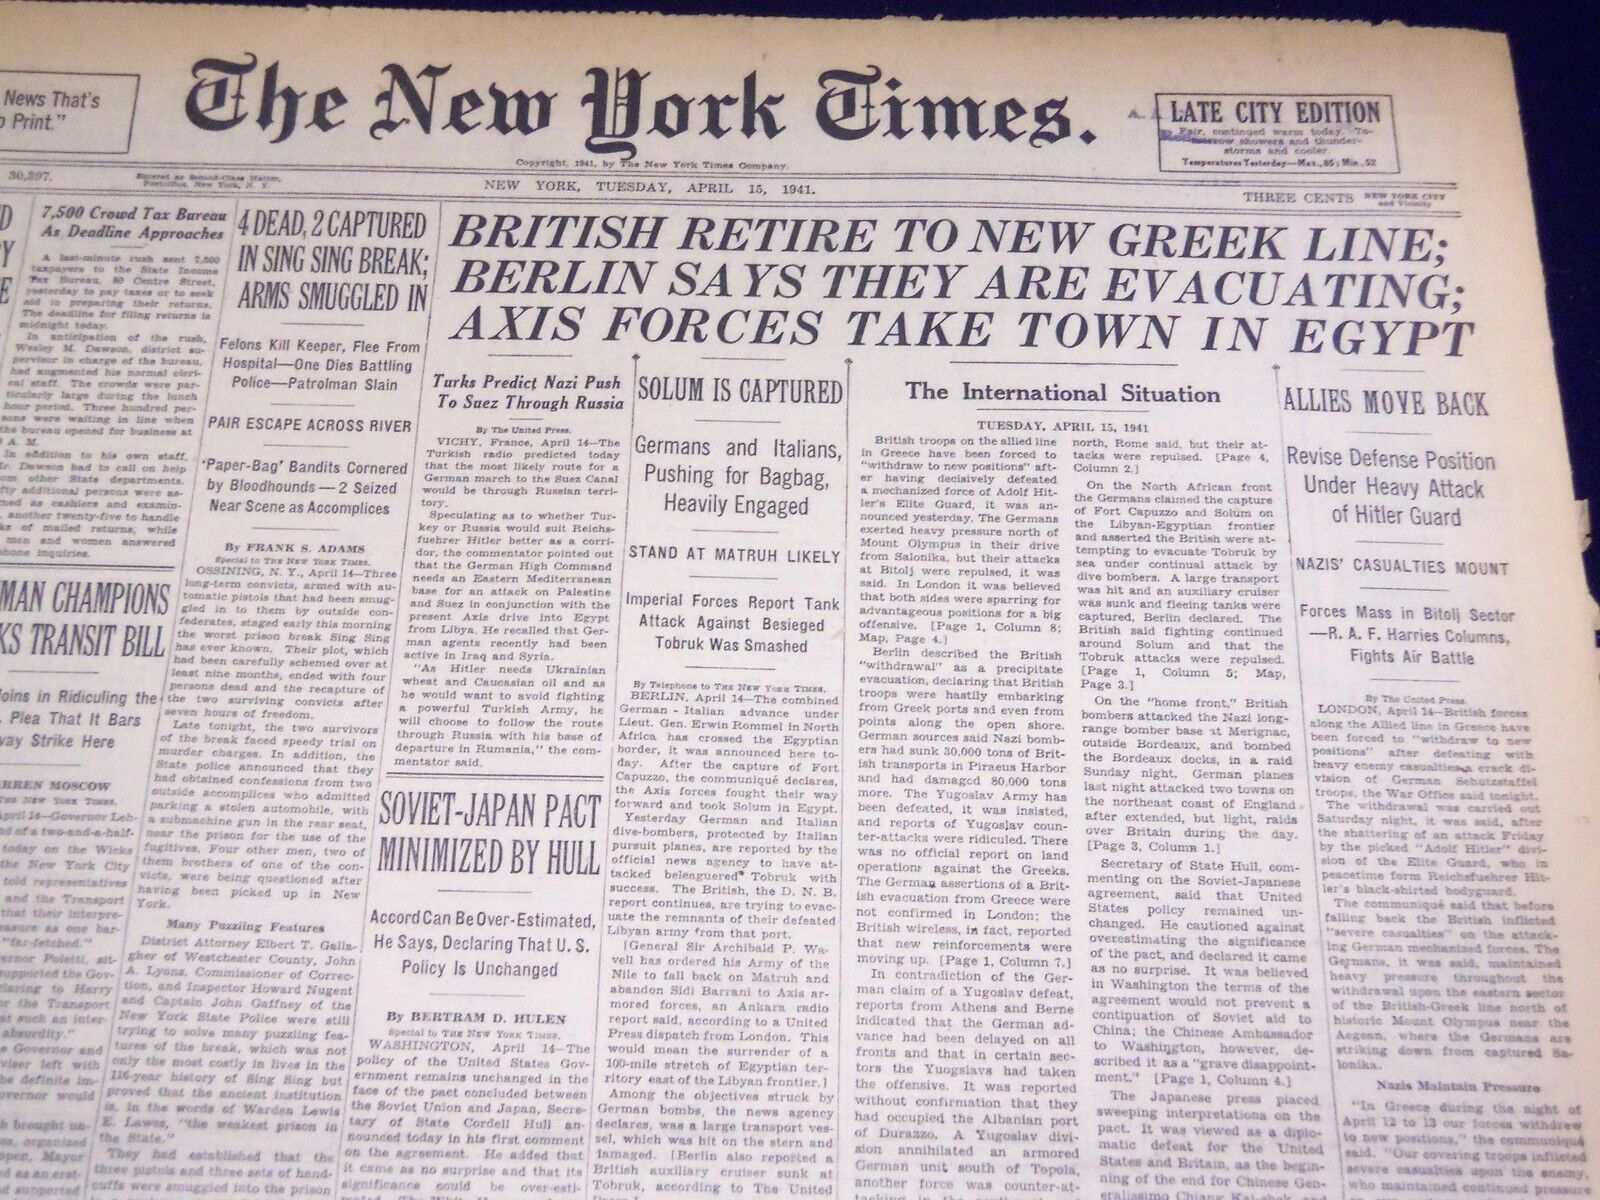 1941 APRIL 15 NEW YORK TIMES - BRITISH RETIRE TO NEW GREEK LINE - NT 1452